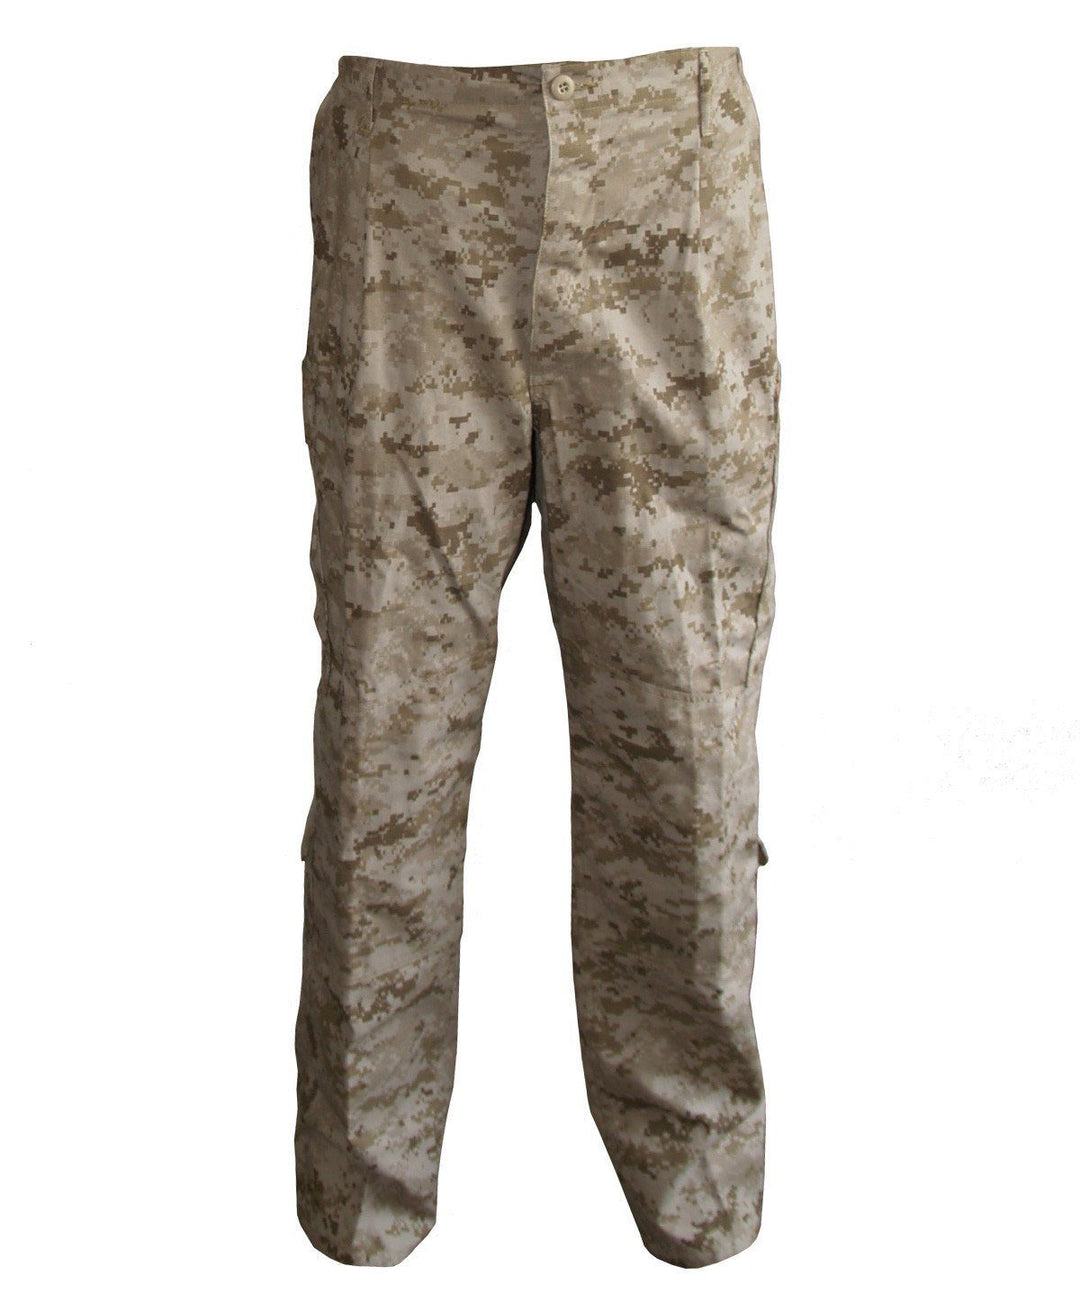 Apparel - Bottoms - Combat - USMC FROG Fire Resistant Combat Pants Desert (SURPLUS)